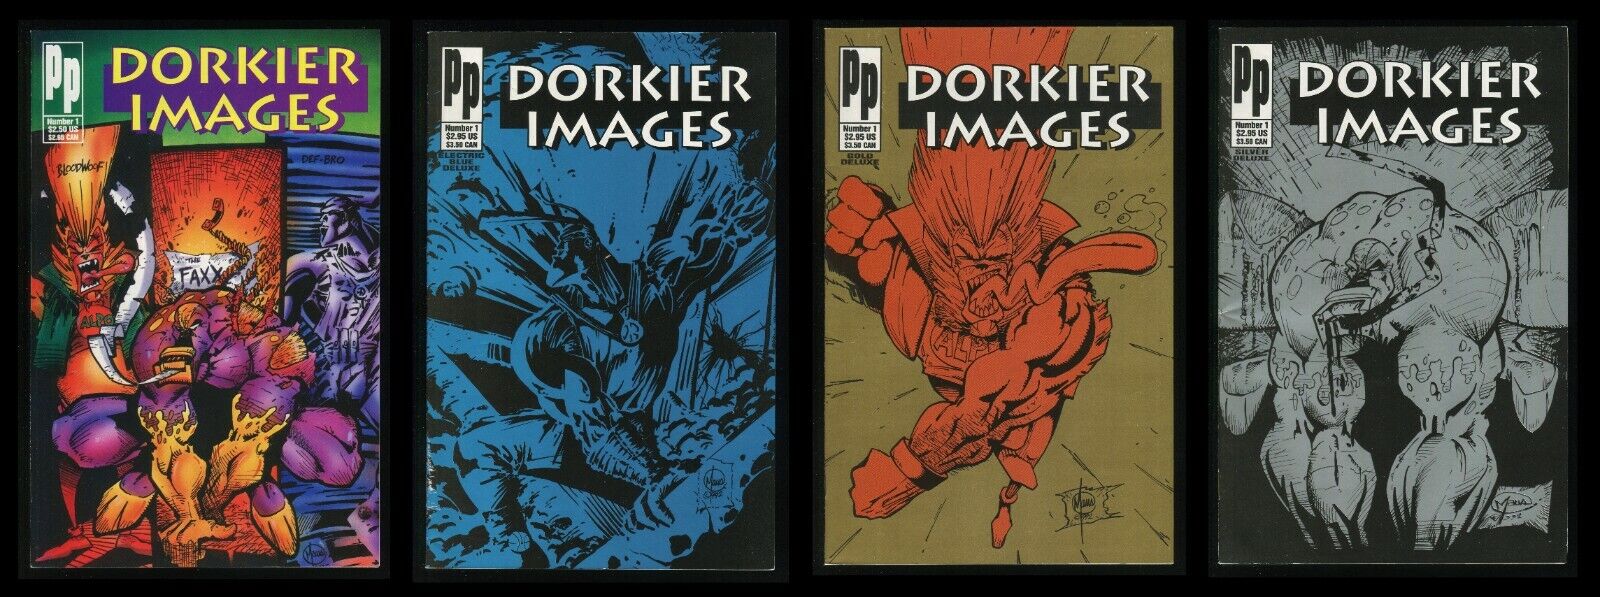 Dorkier Images Variant Comics Lot Darker Images Parody Bloodwolf Deathblow Maxx